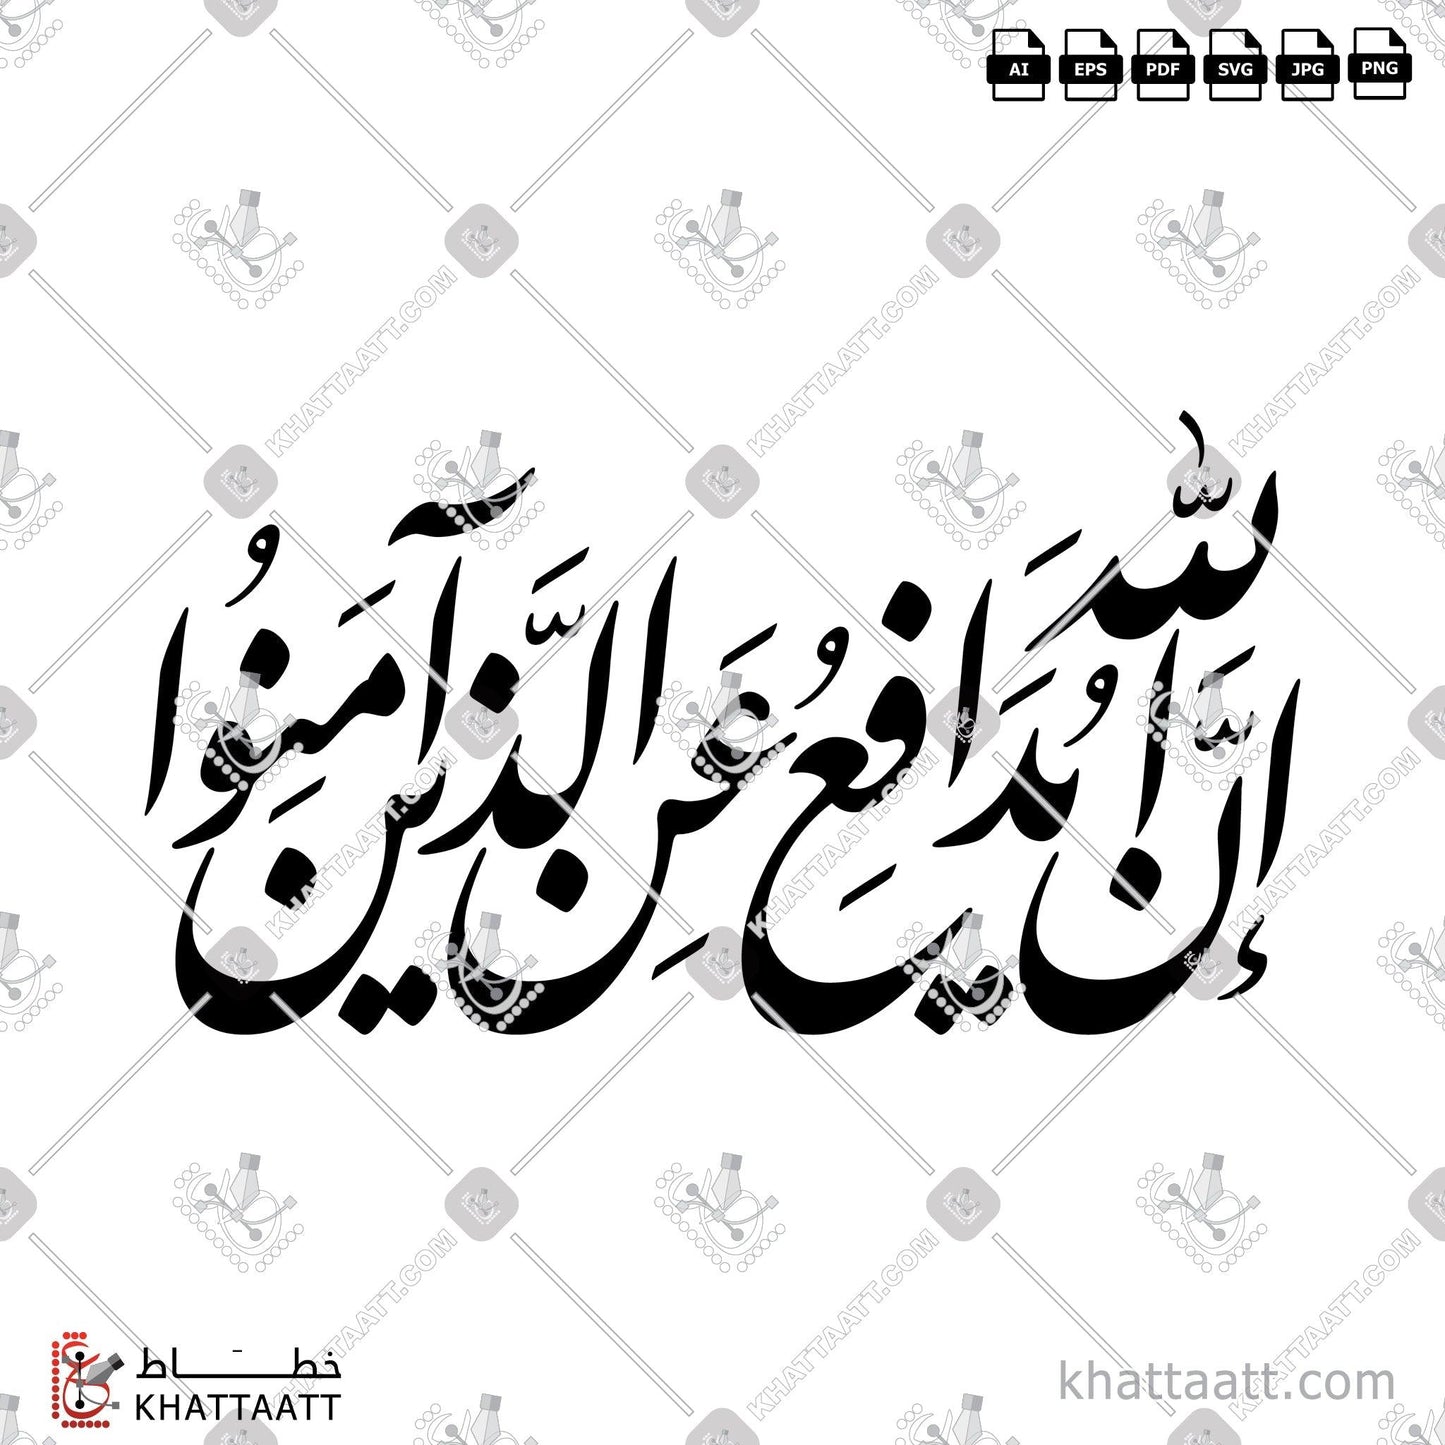 Download Arabic Calligraphy of إن الله يدافع عن الذين آمنوا in Farsi - الخط الفارسي in vector and .png